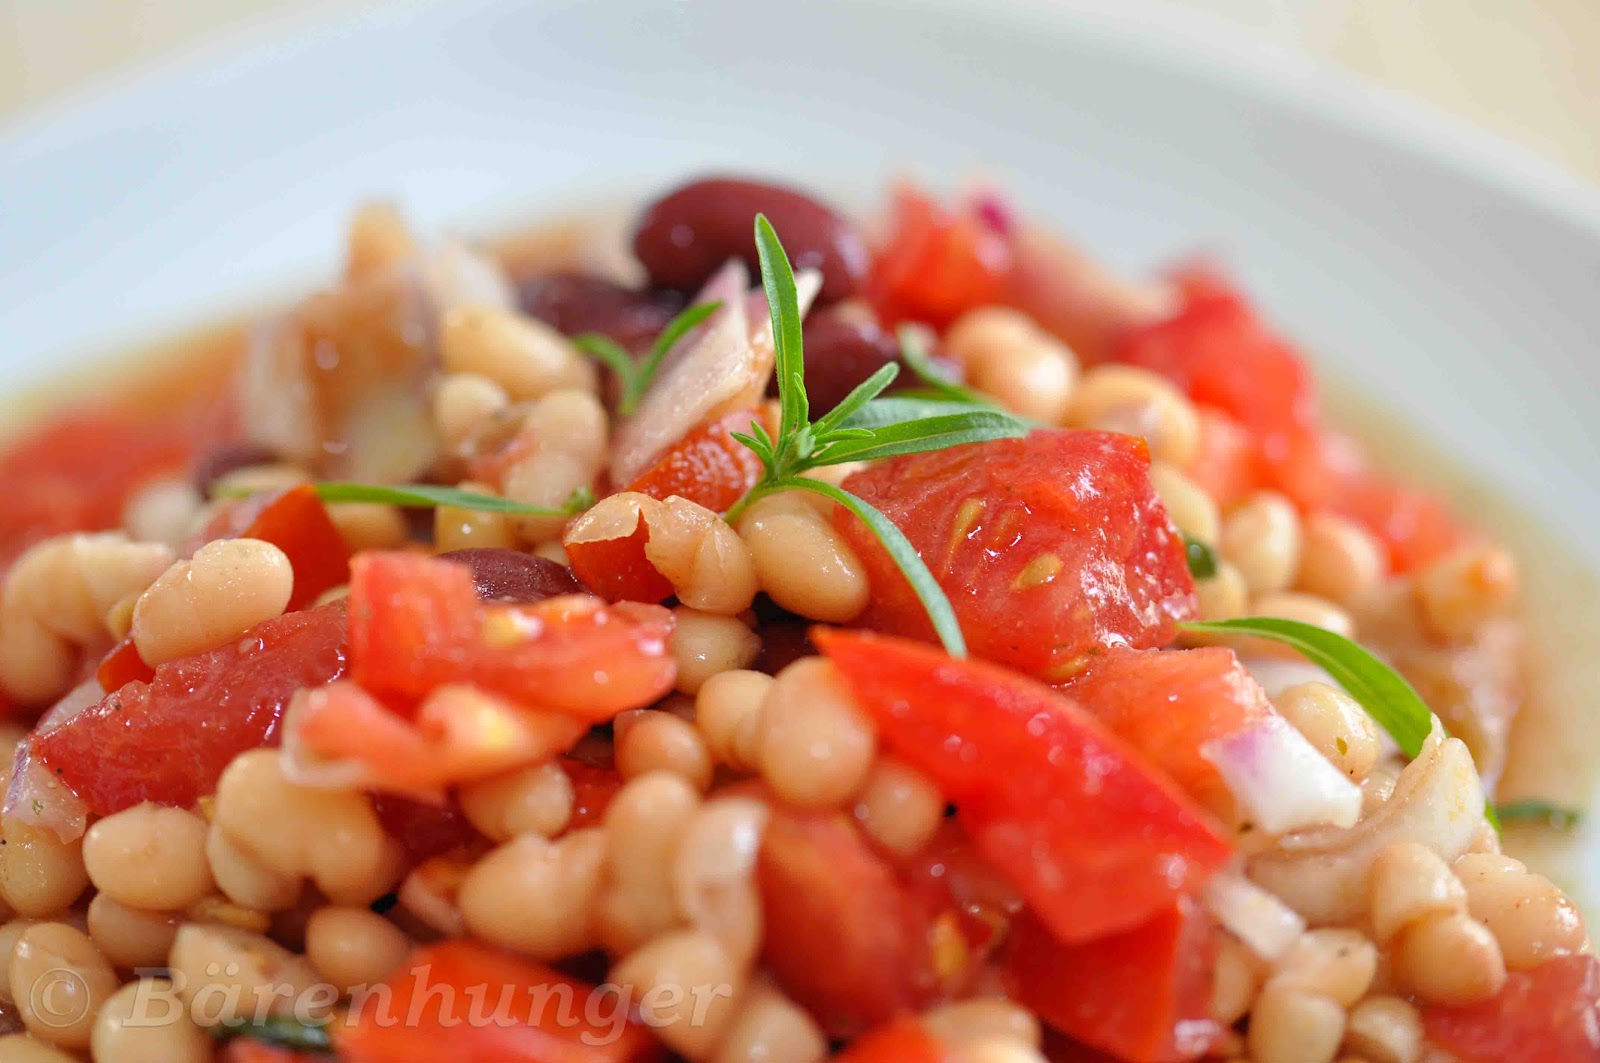 Tomaten Bohnen Salat | Bärenhunger